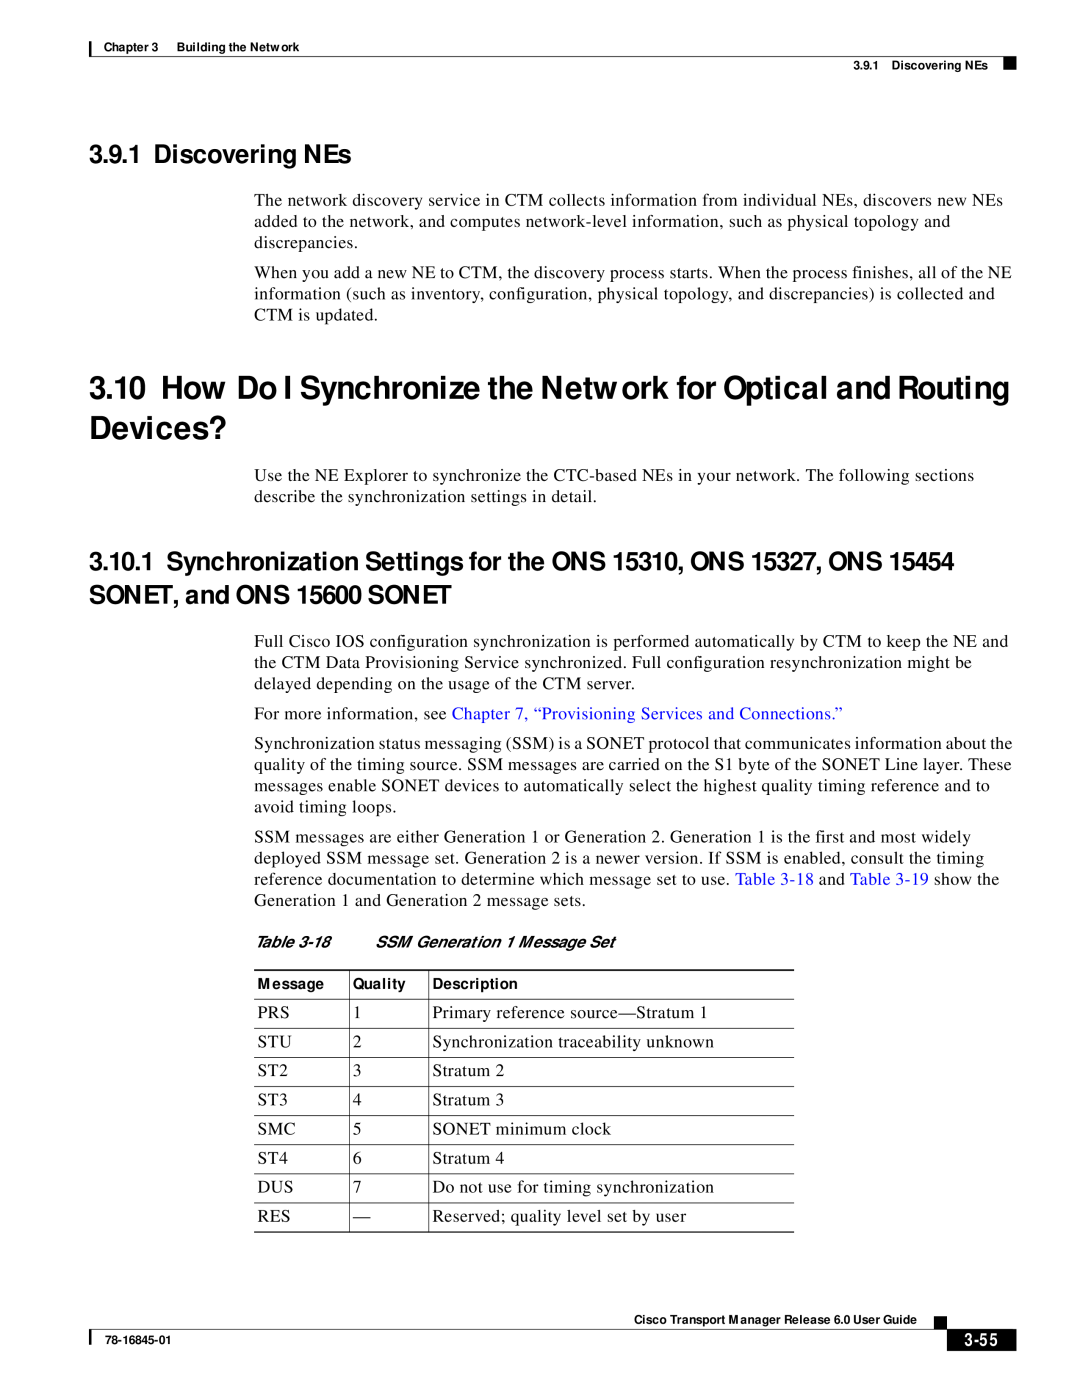 Cisco Systems 78-16845-01 manual Discovering NEs, 3-55, SSM Generation 1 Message Set 